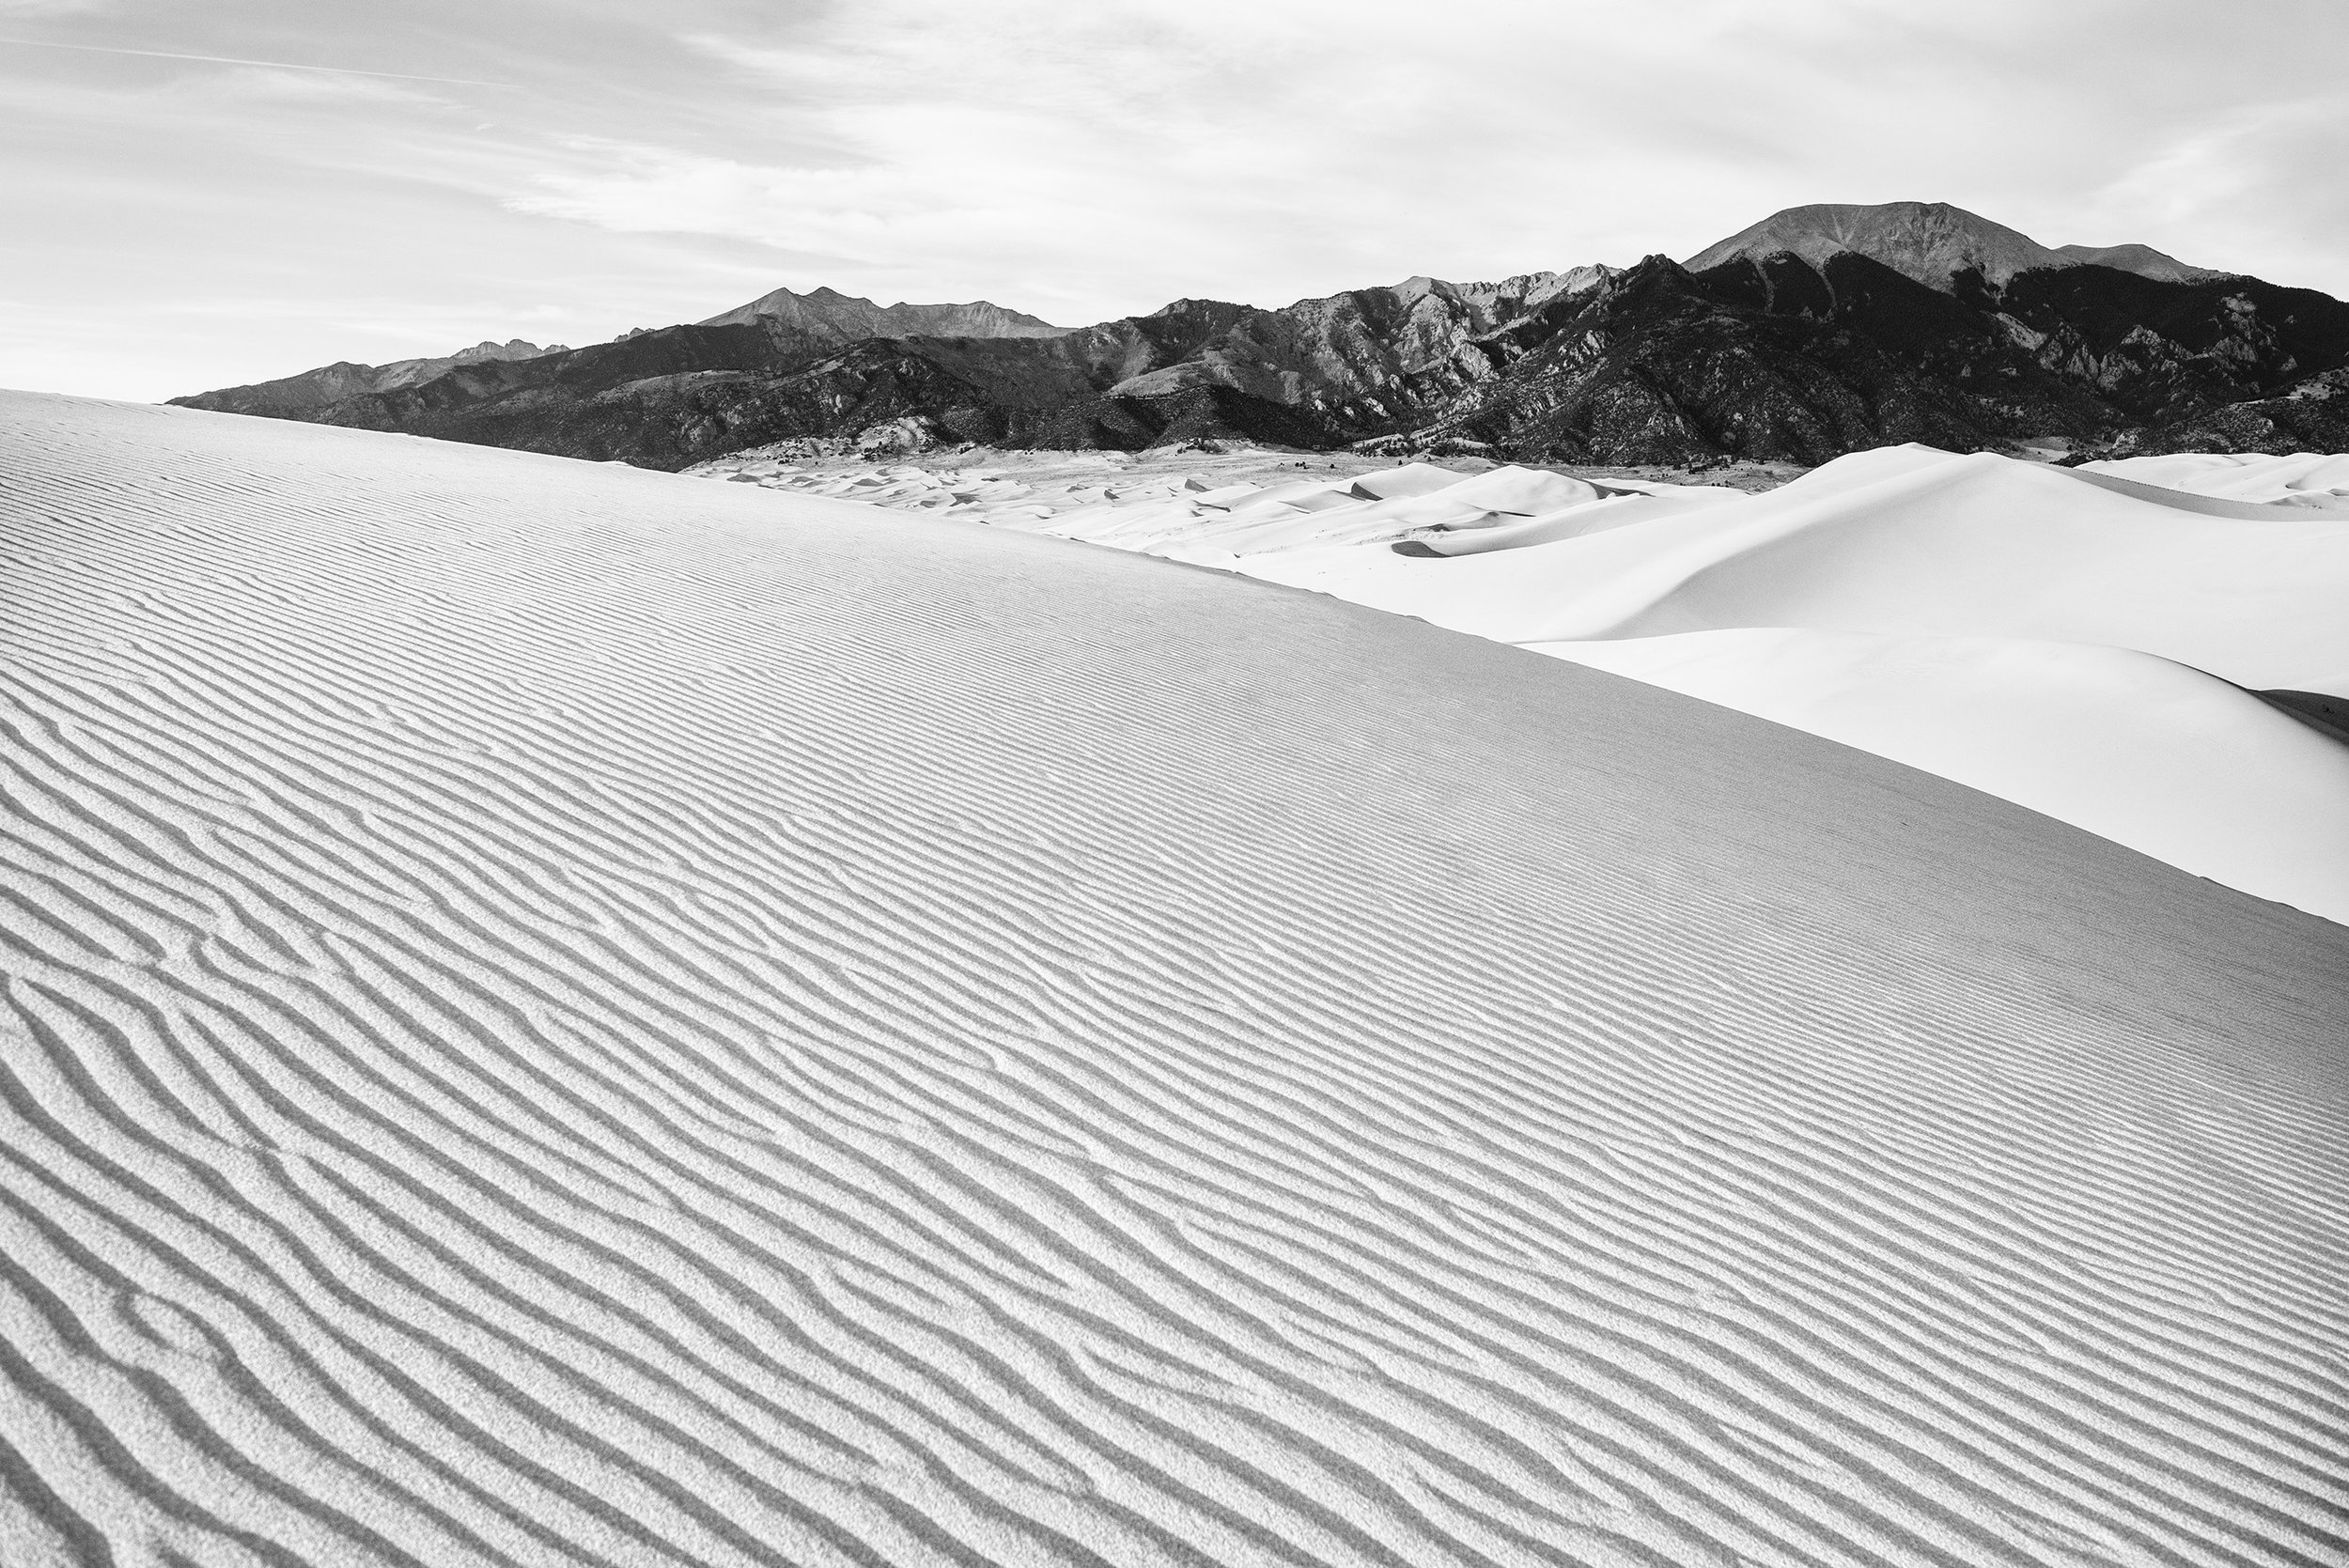  Great Sand Dunes 